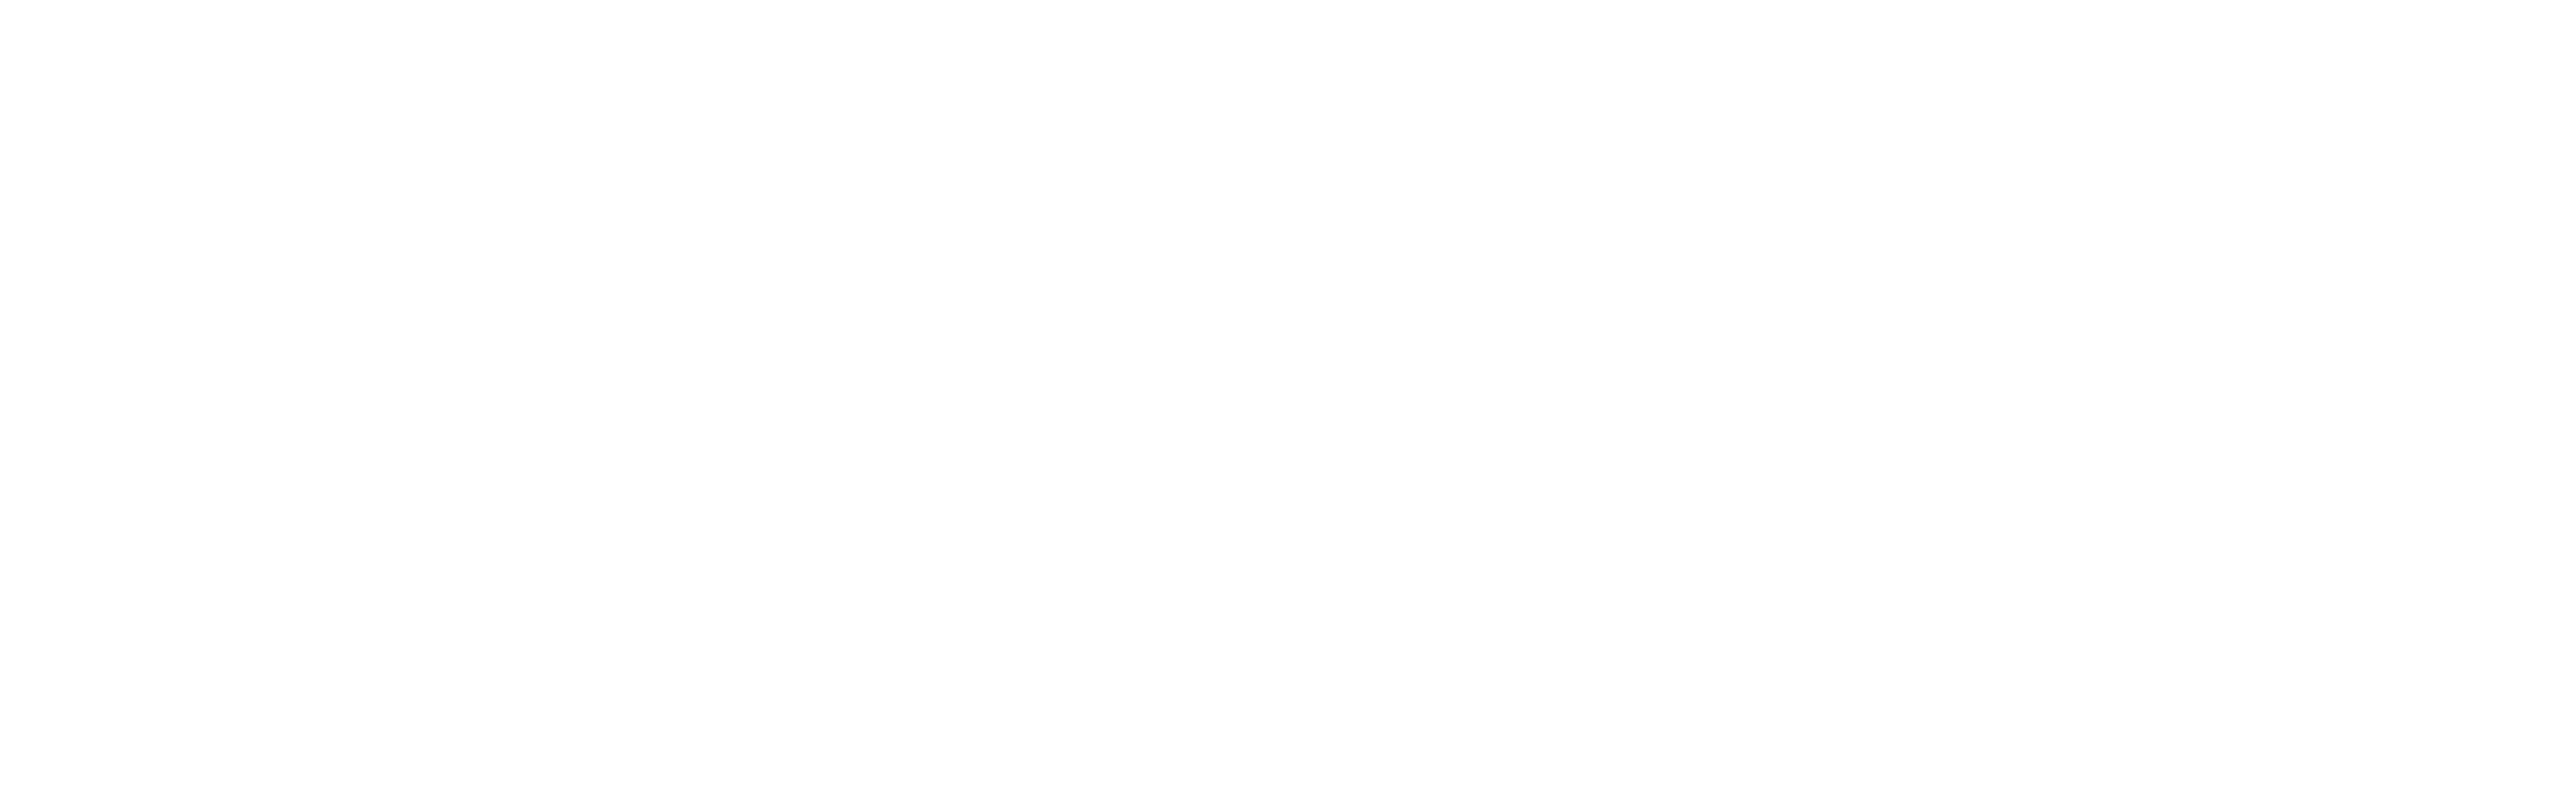 UT Tyler Radio 99.7 FM - KVUT